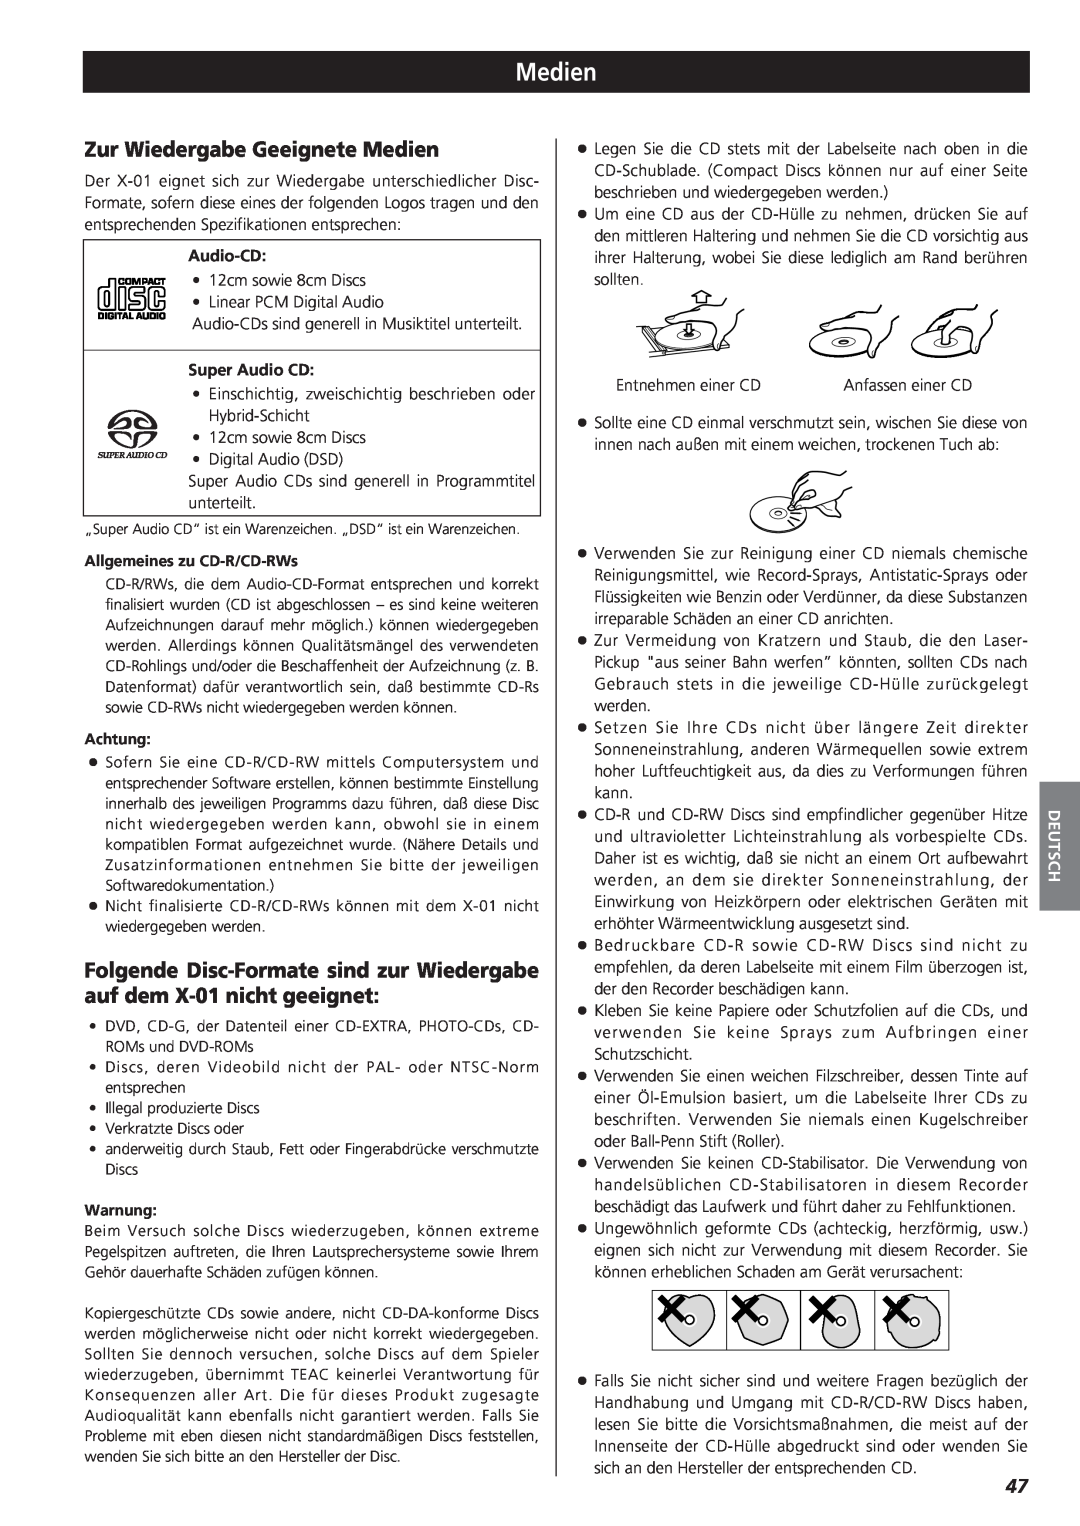 Esoteric D00816700B manual Zur Wiedergabe Geeignete Medien, Audio-CD, Super Audio CD 